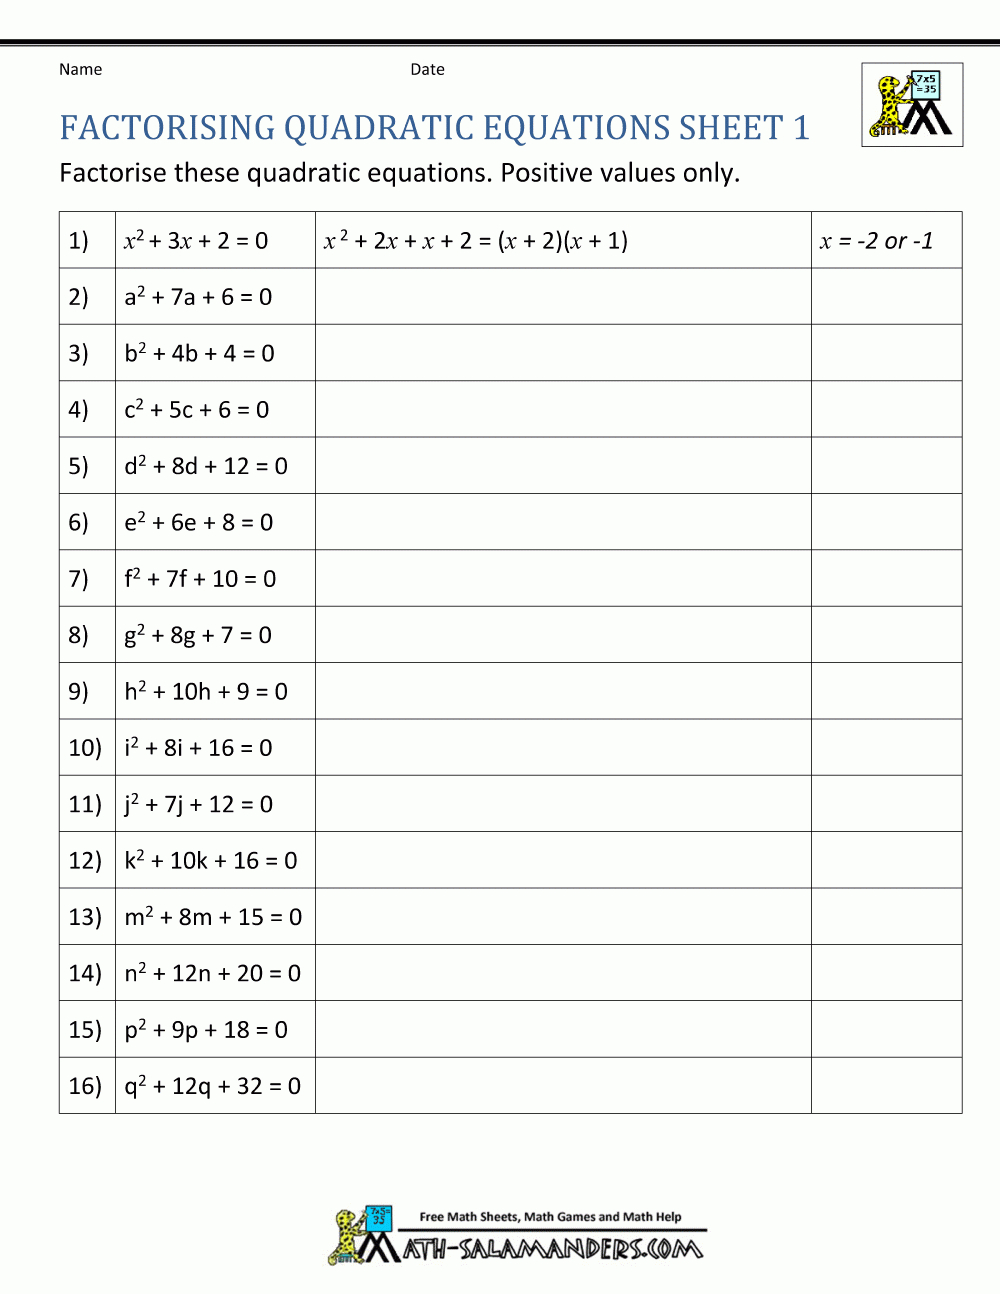 Factoring Quadratic Equations Throughout Algebra 2 Factoring Quadratics Worksheet